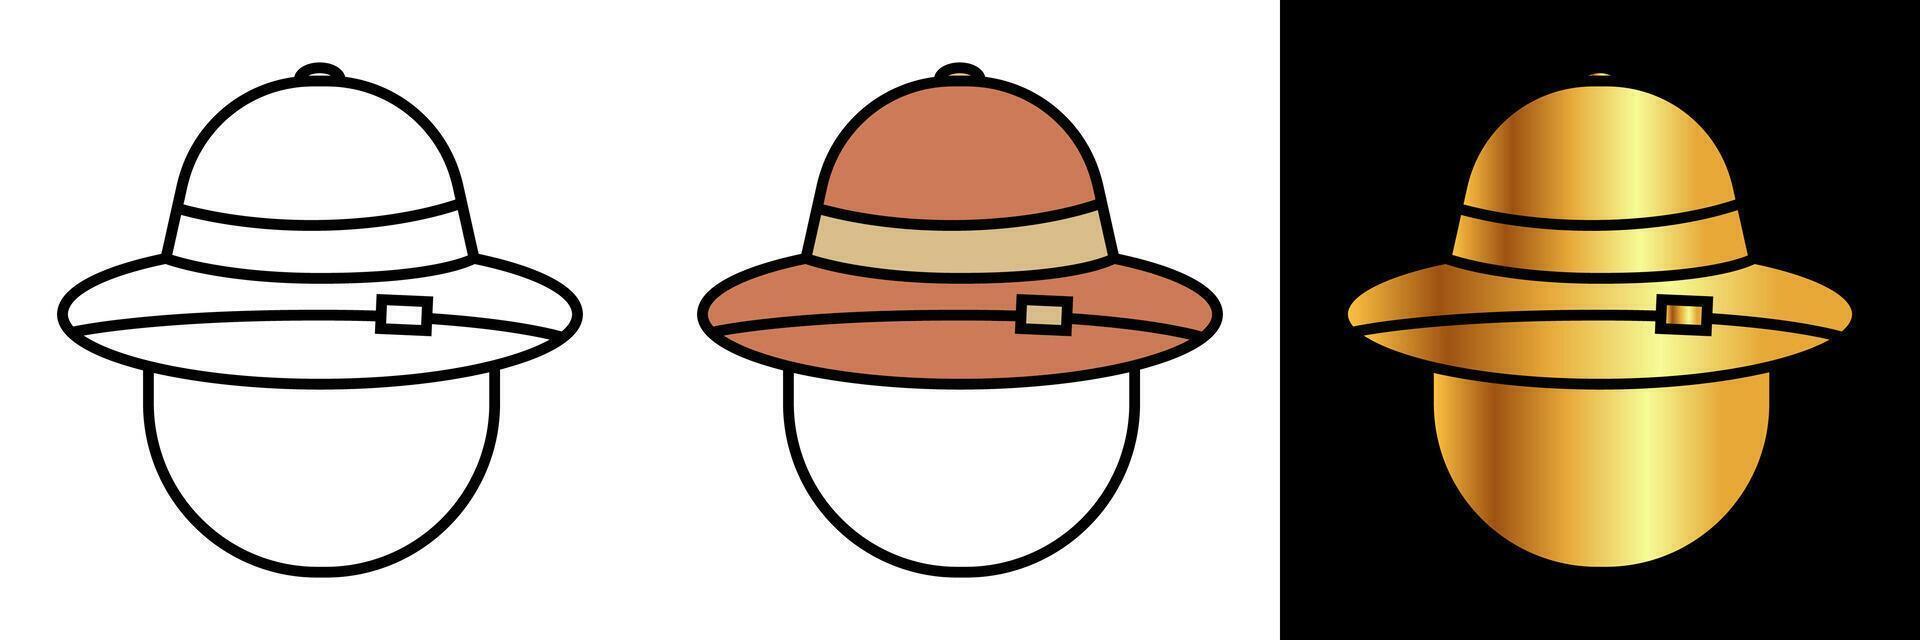 Safari Hat Icon, an icon representing a safari hat, symbolizing adventure, exploration, and protection in the wilderness. vector